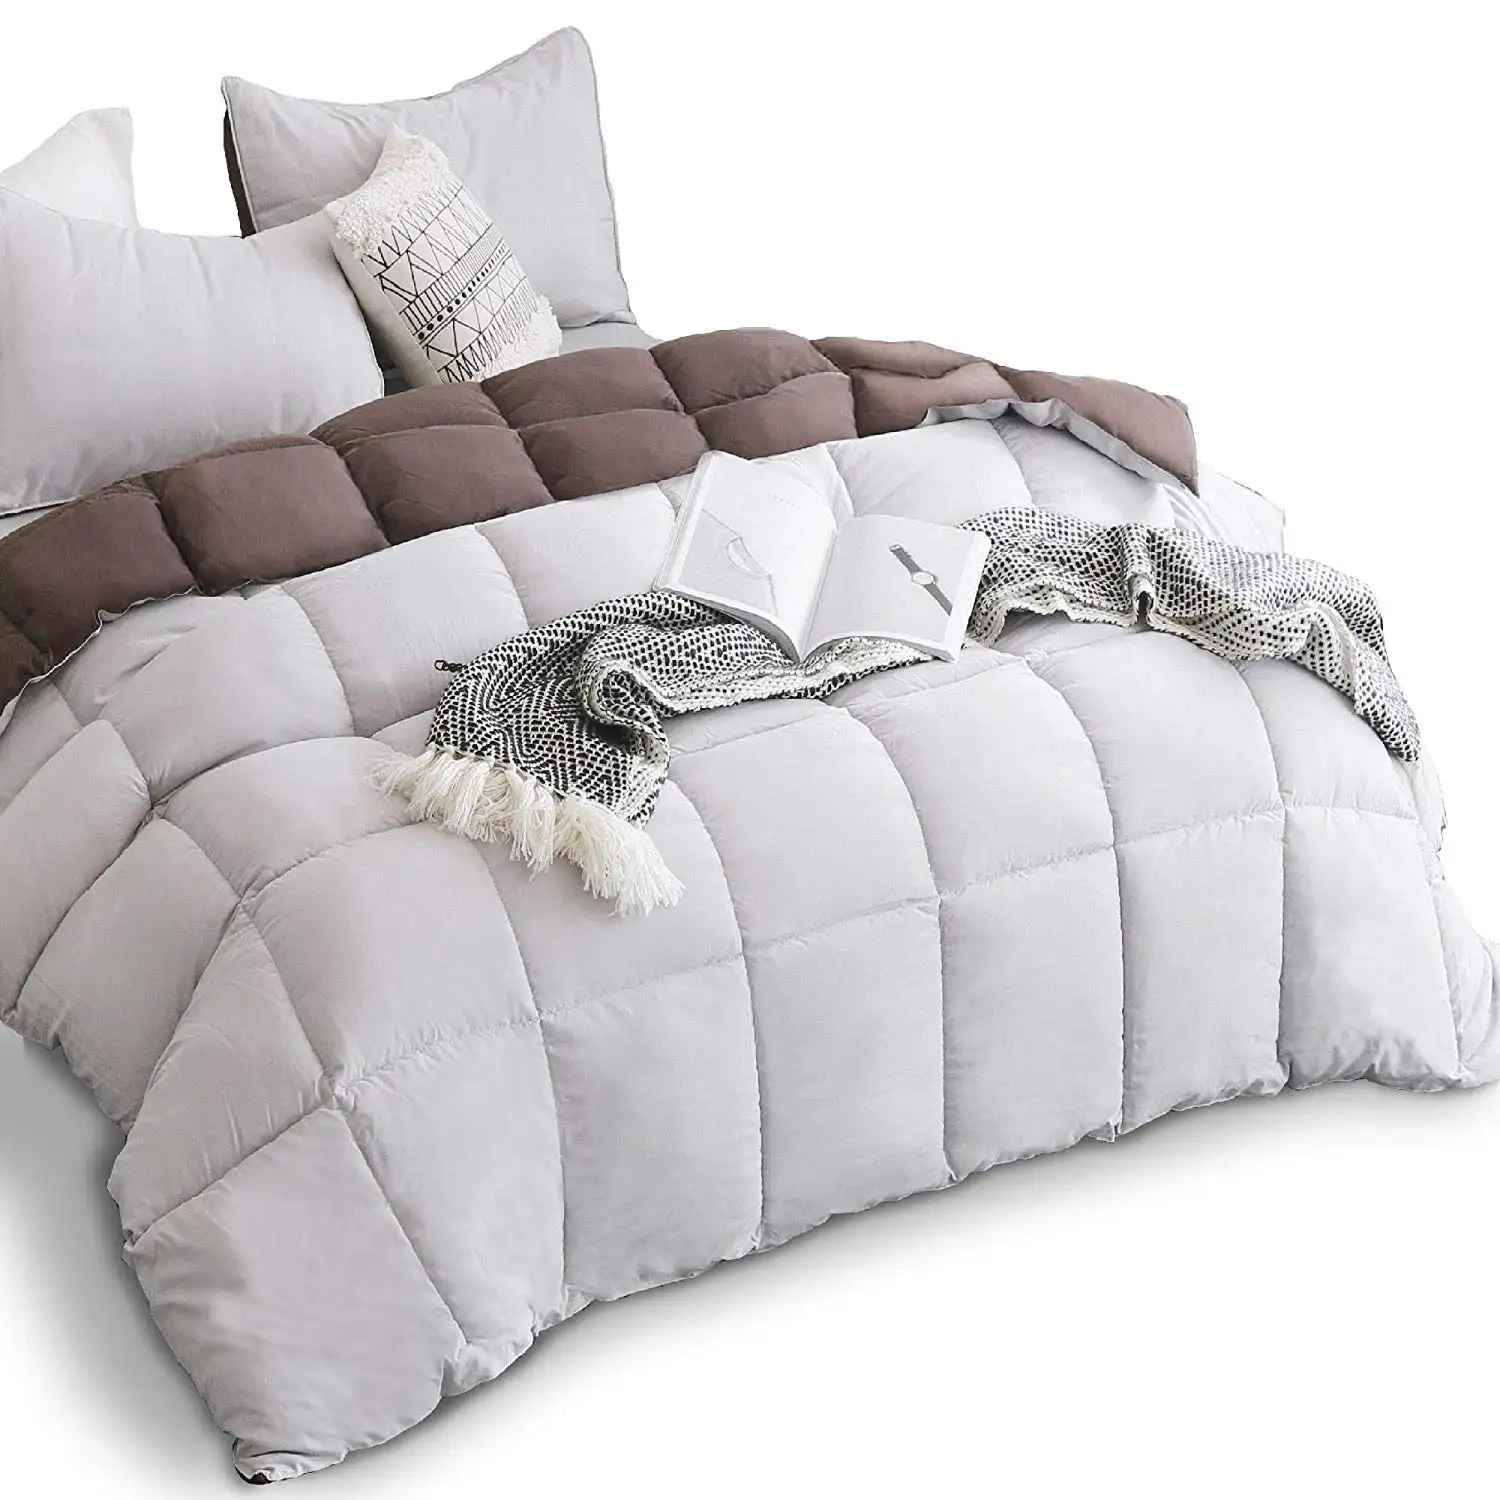 New goods fluffy comforter set easy-wash ultra-soft down alternative bedding comforters